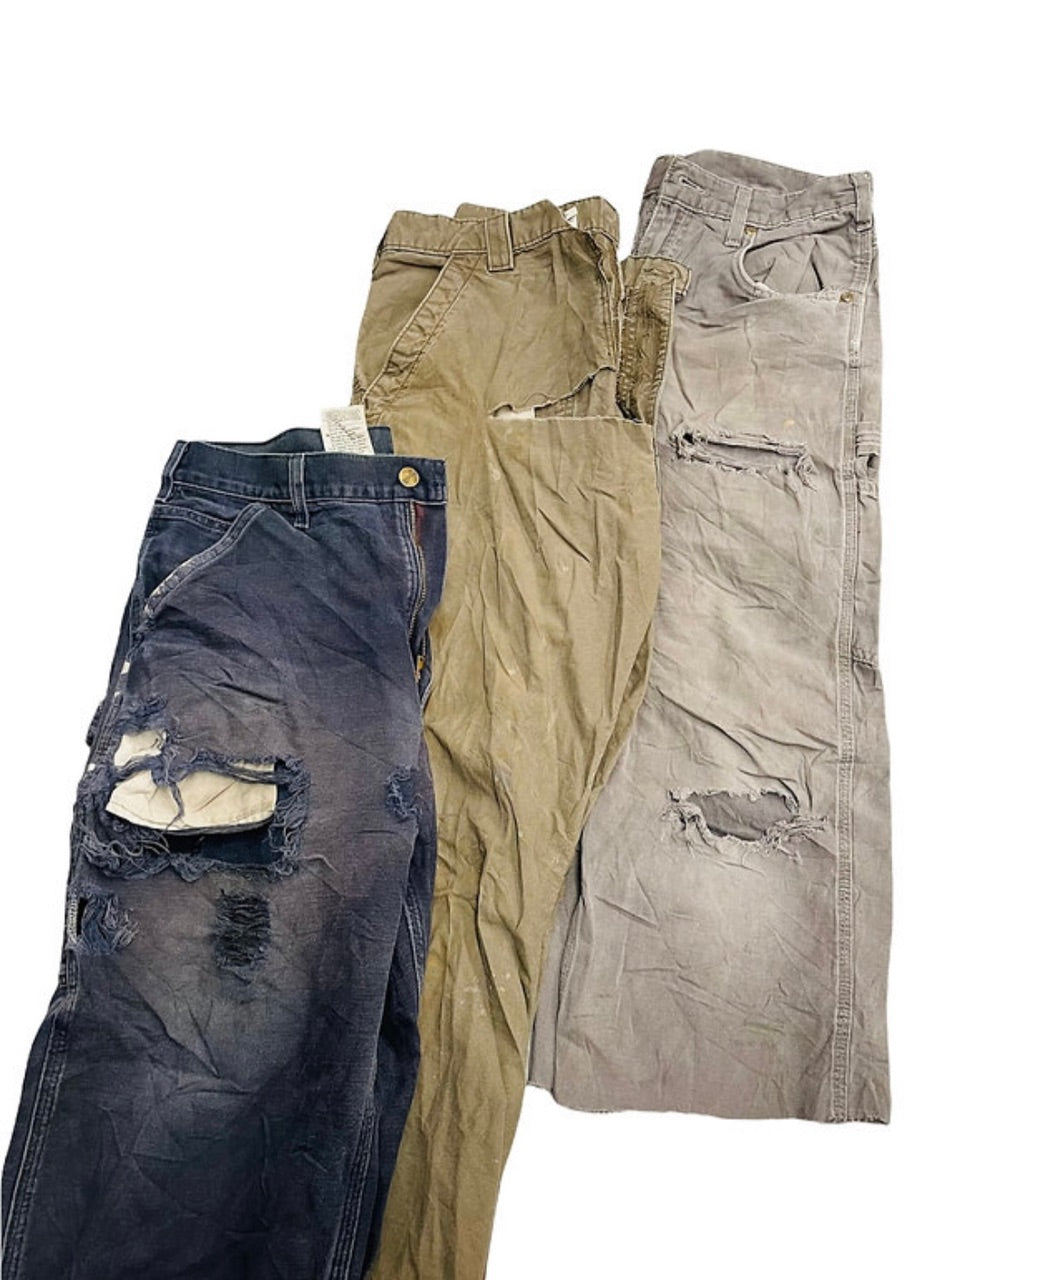 Carhartt Trousers Grade B/C - Large Sizes X20